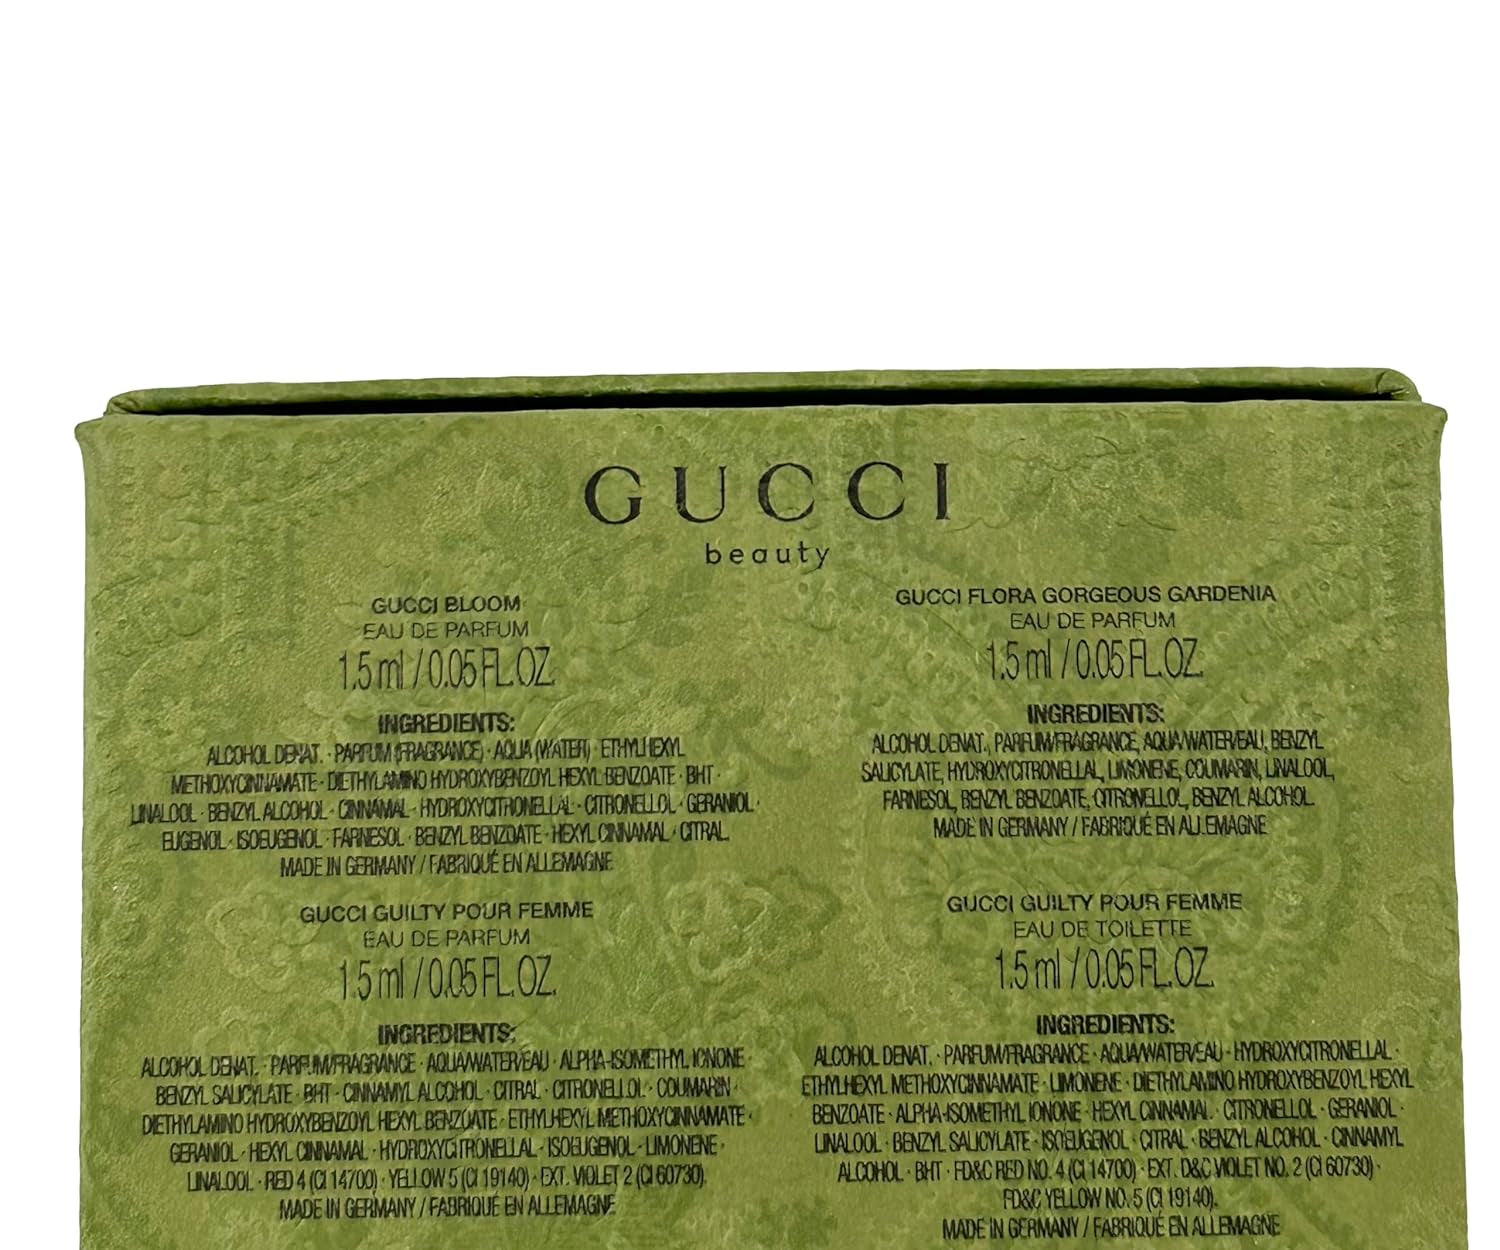 Gucci Sample Perfume WOMEN GIFT SET Bloom, Flora Gorgeous Gardenia, Guilty Pour Femme EDP, Guilty Pour Femme EDT - 1.5 ml / 0.05 oz - set of 4 spray samples (2784)